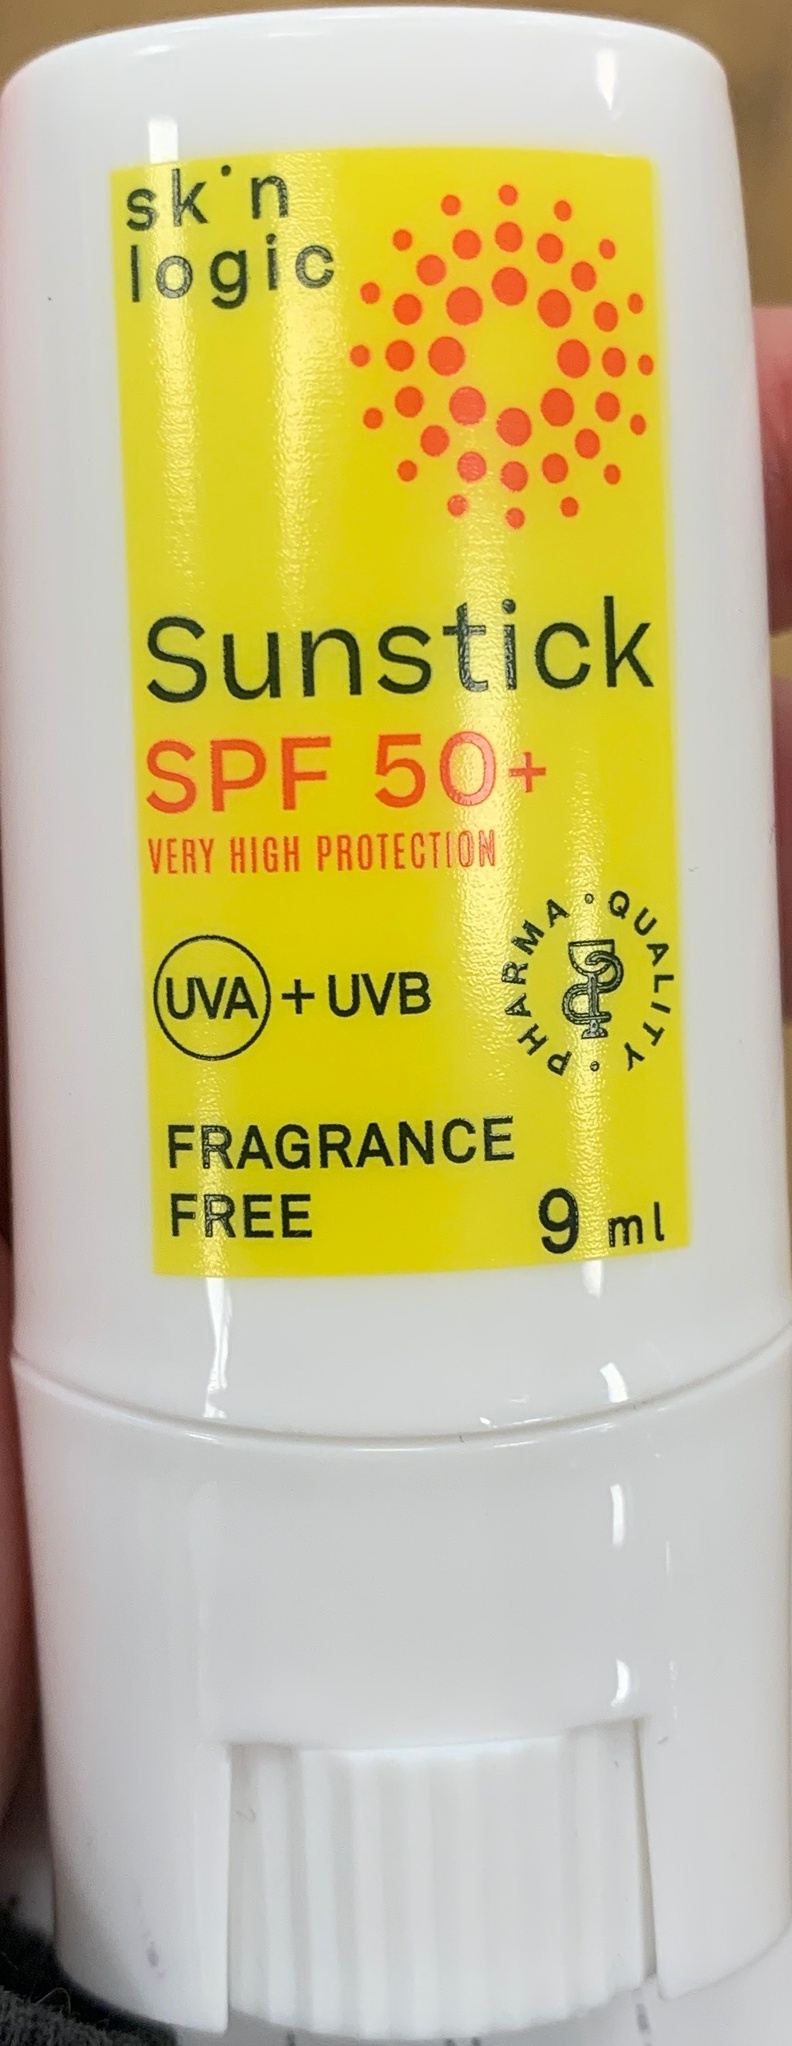 Skin Logic Sunstick SPF 50